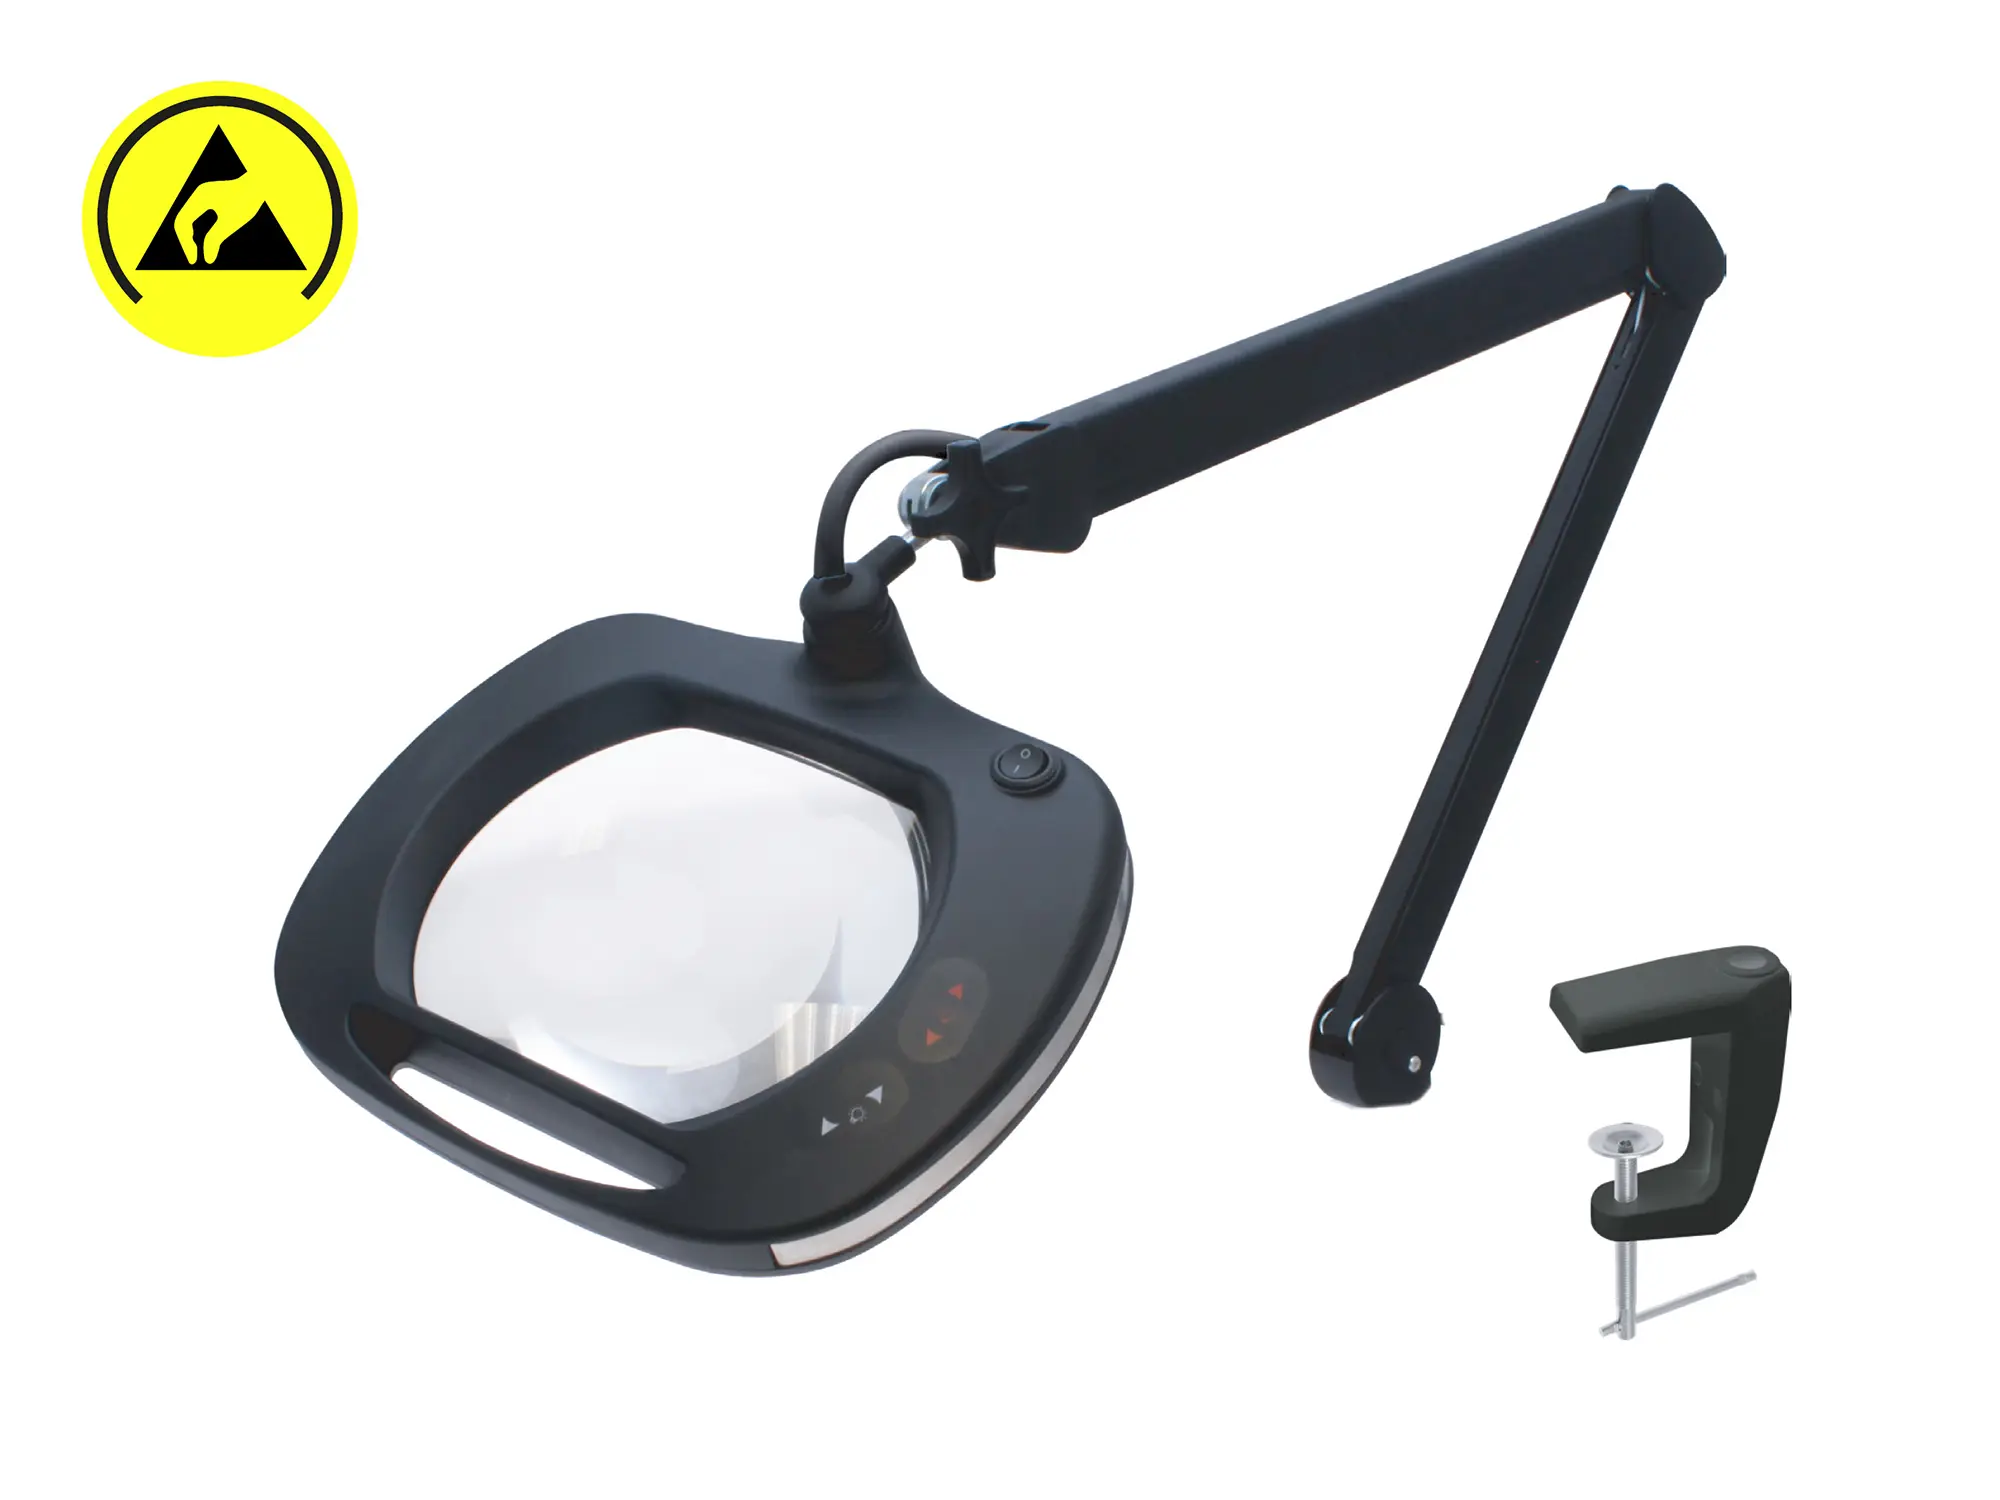 LED Magnifier Light 2.25X from Ideal-tek